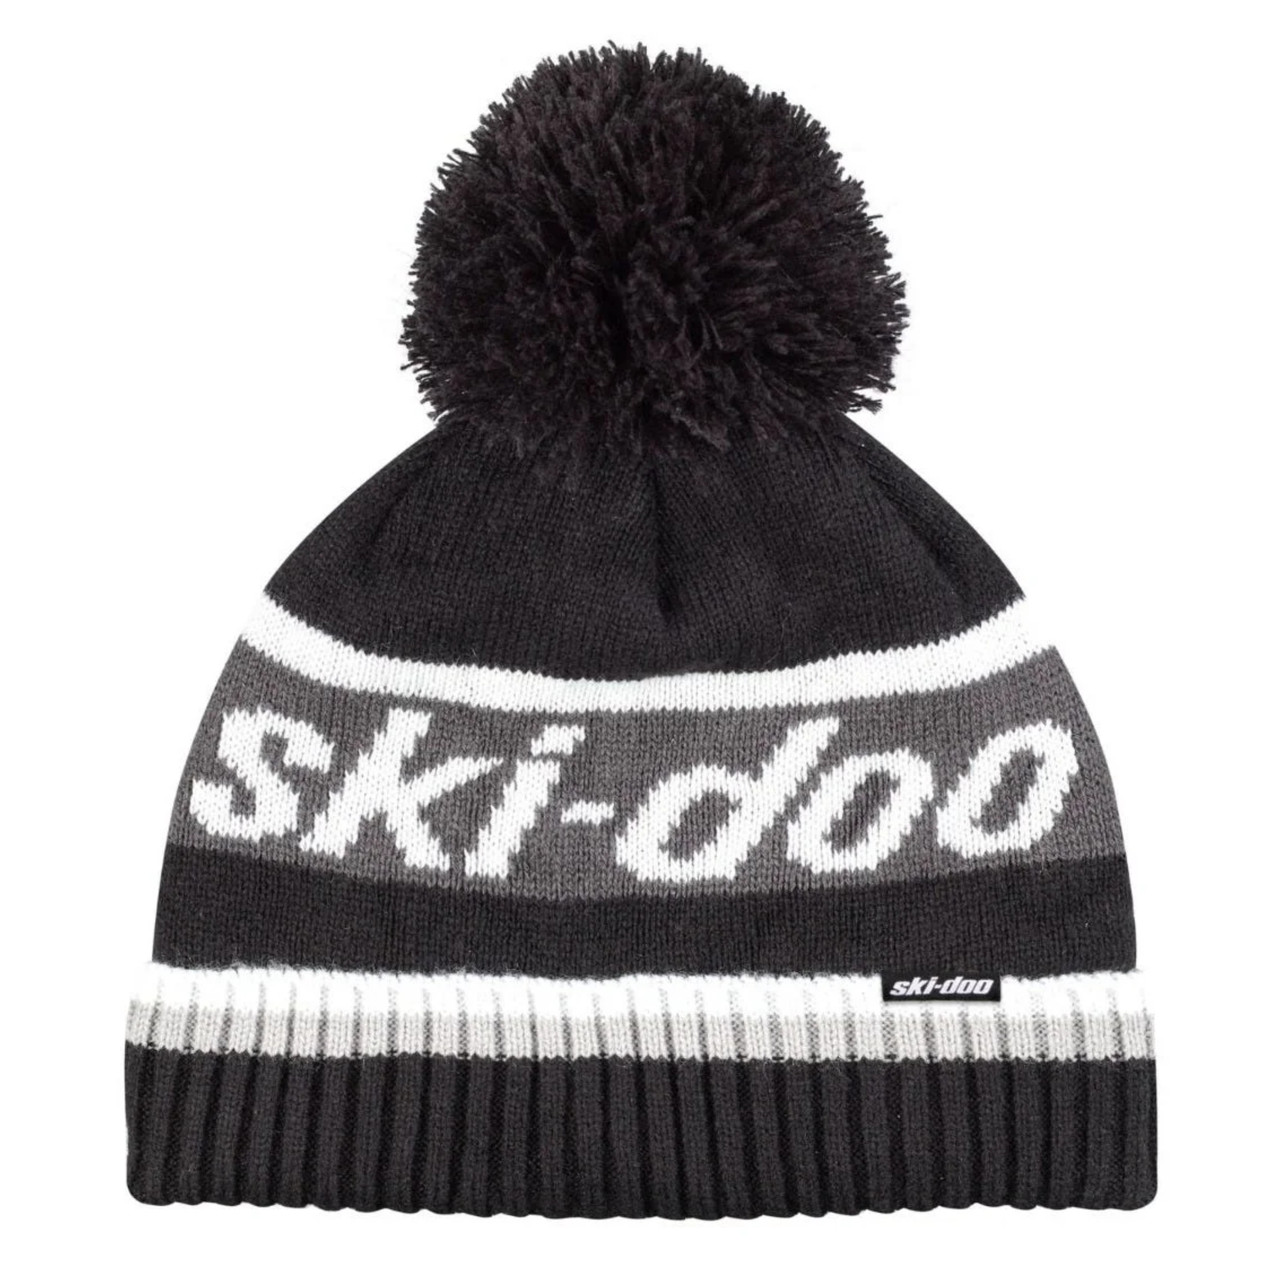 Ski-Doo New OEM Unisex One Size Black Pom-Pom Hat, 4487320090